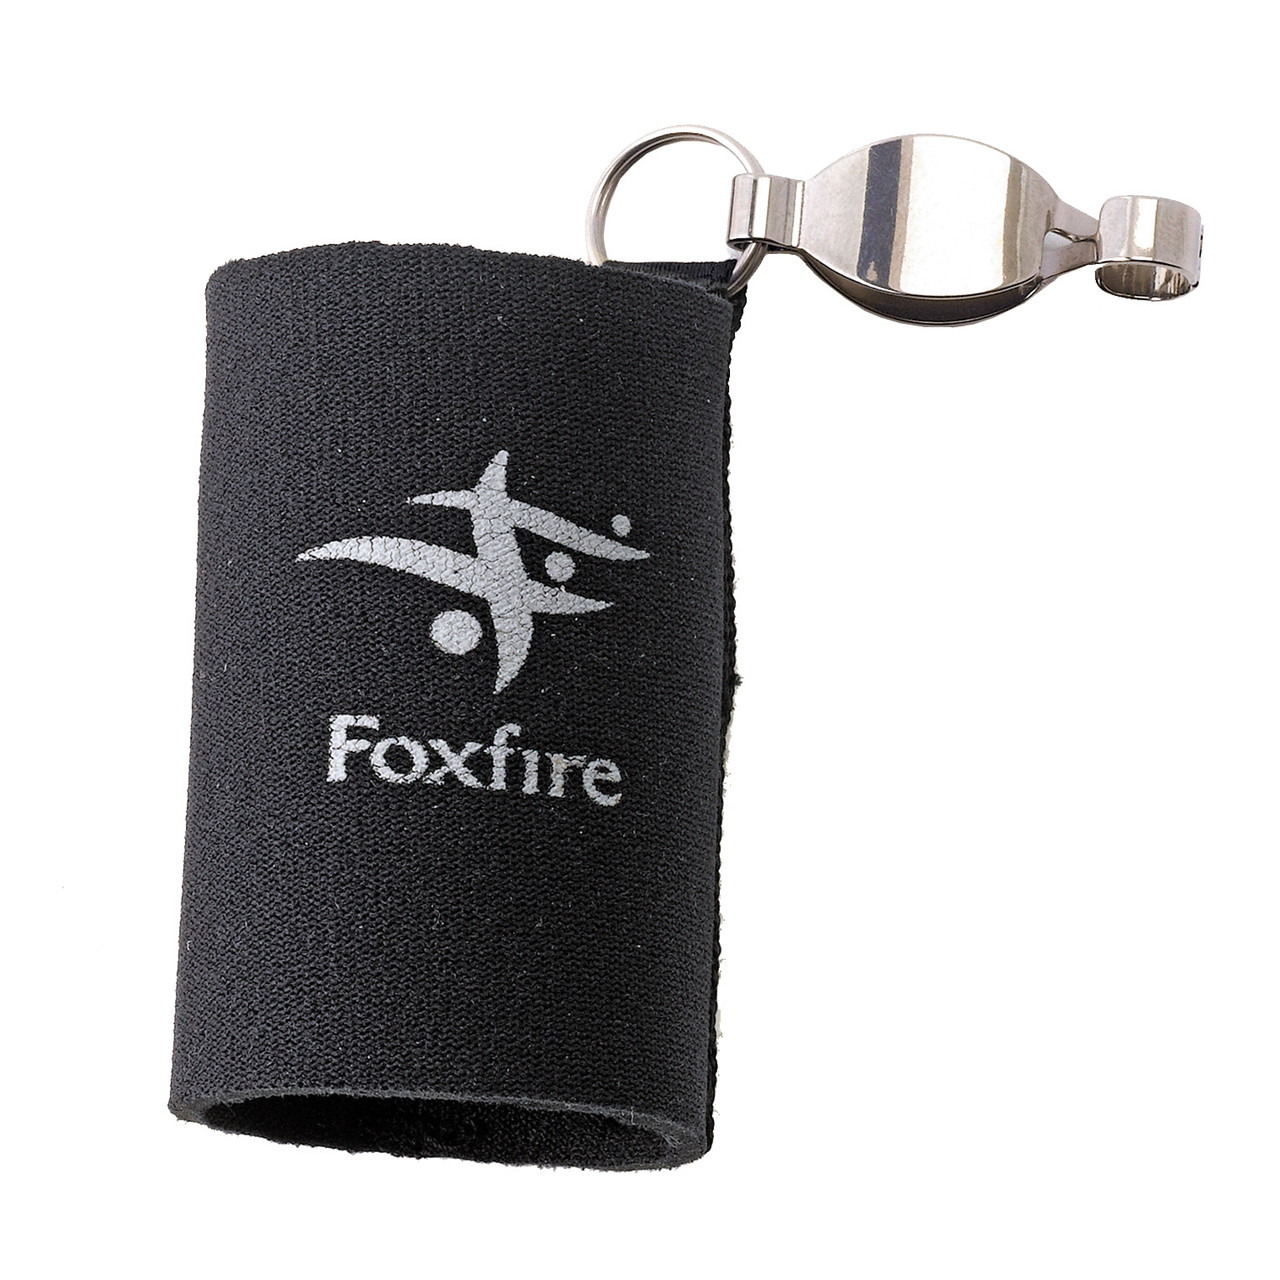 Foxfire  マルチクリップドライシェイクホルダー Multi Clip DRY-SHAKE Holder  NEW!!